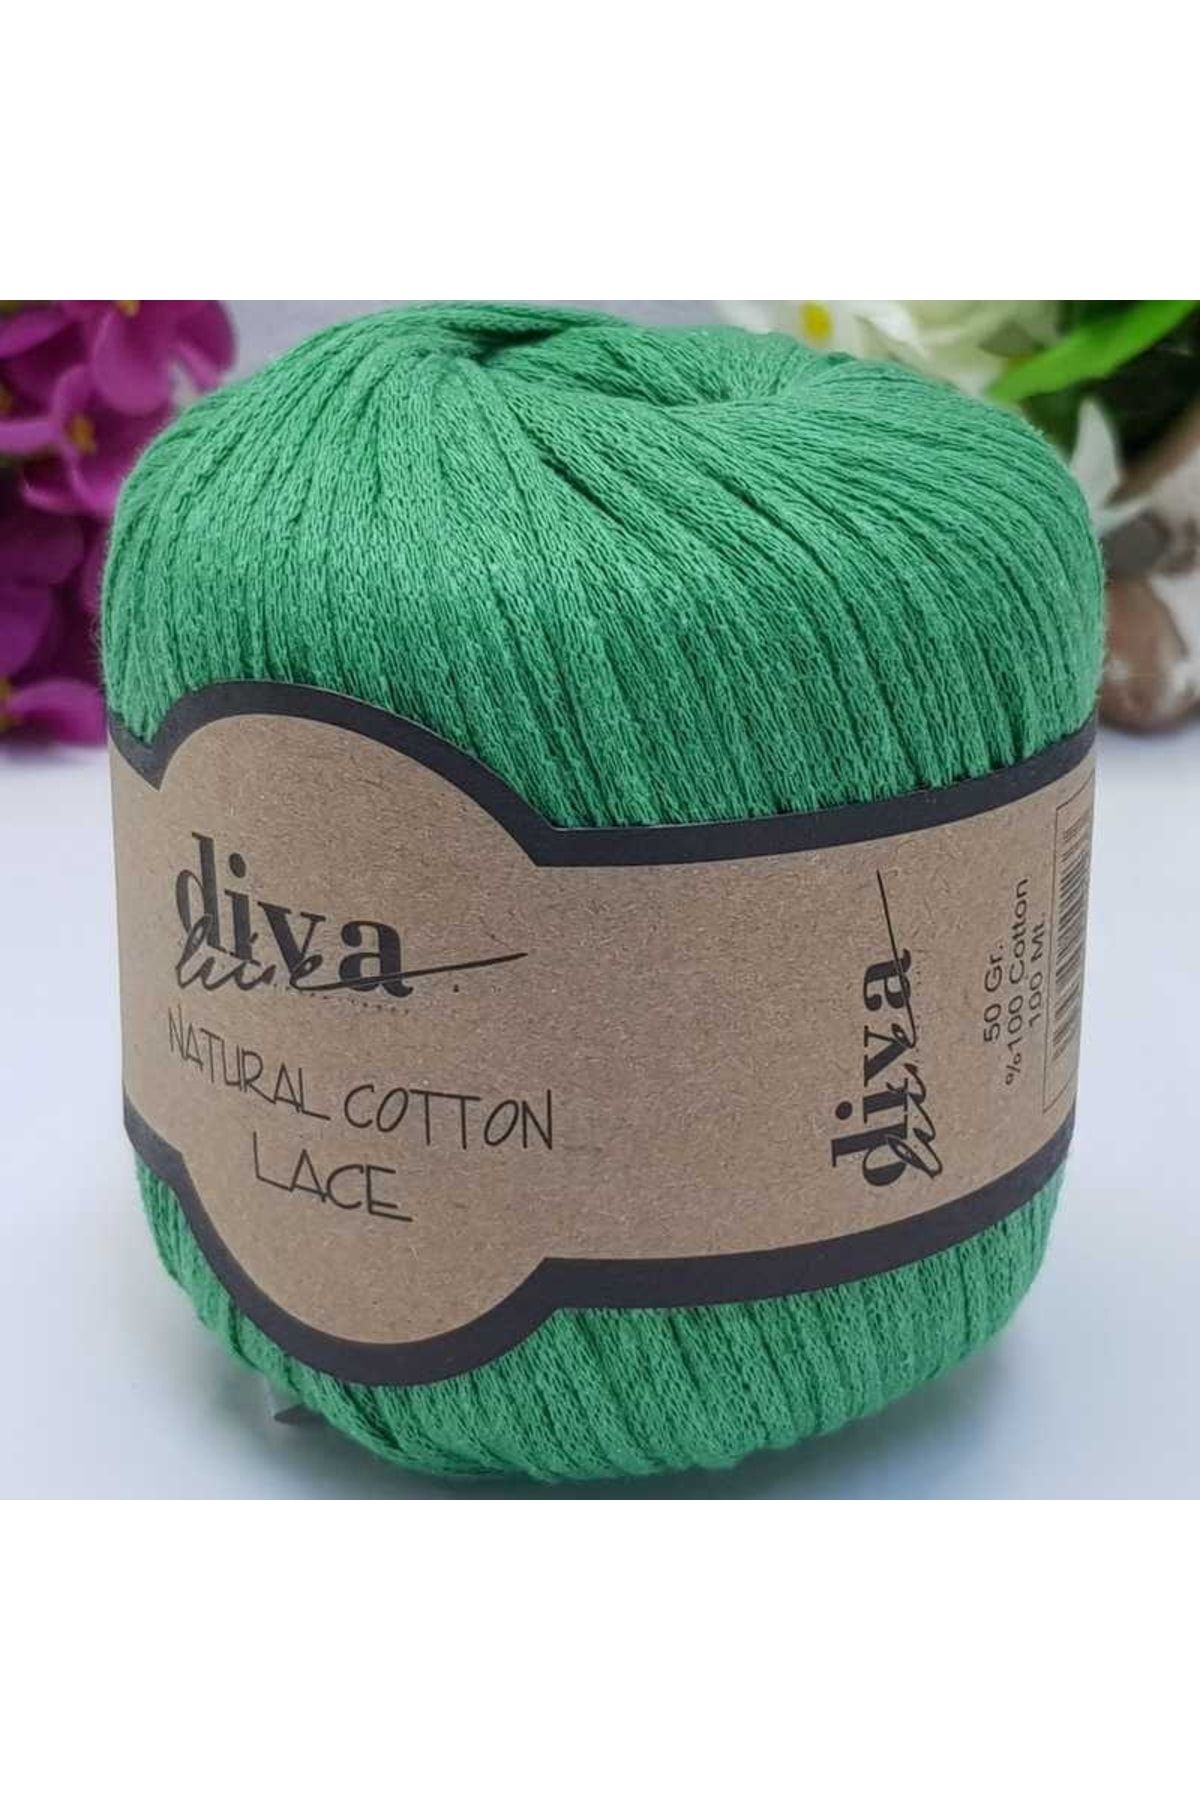 Diva İplik Diva Natural Cotton Lace Lase Ipi 2121 Benetton